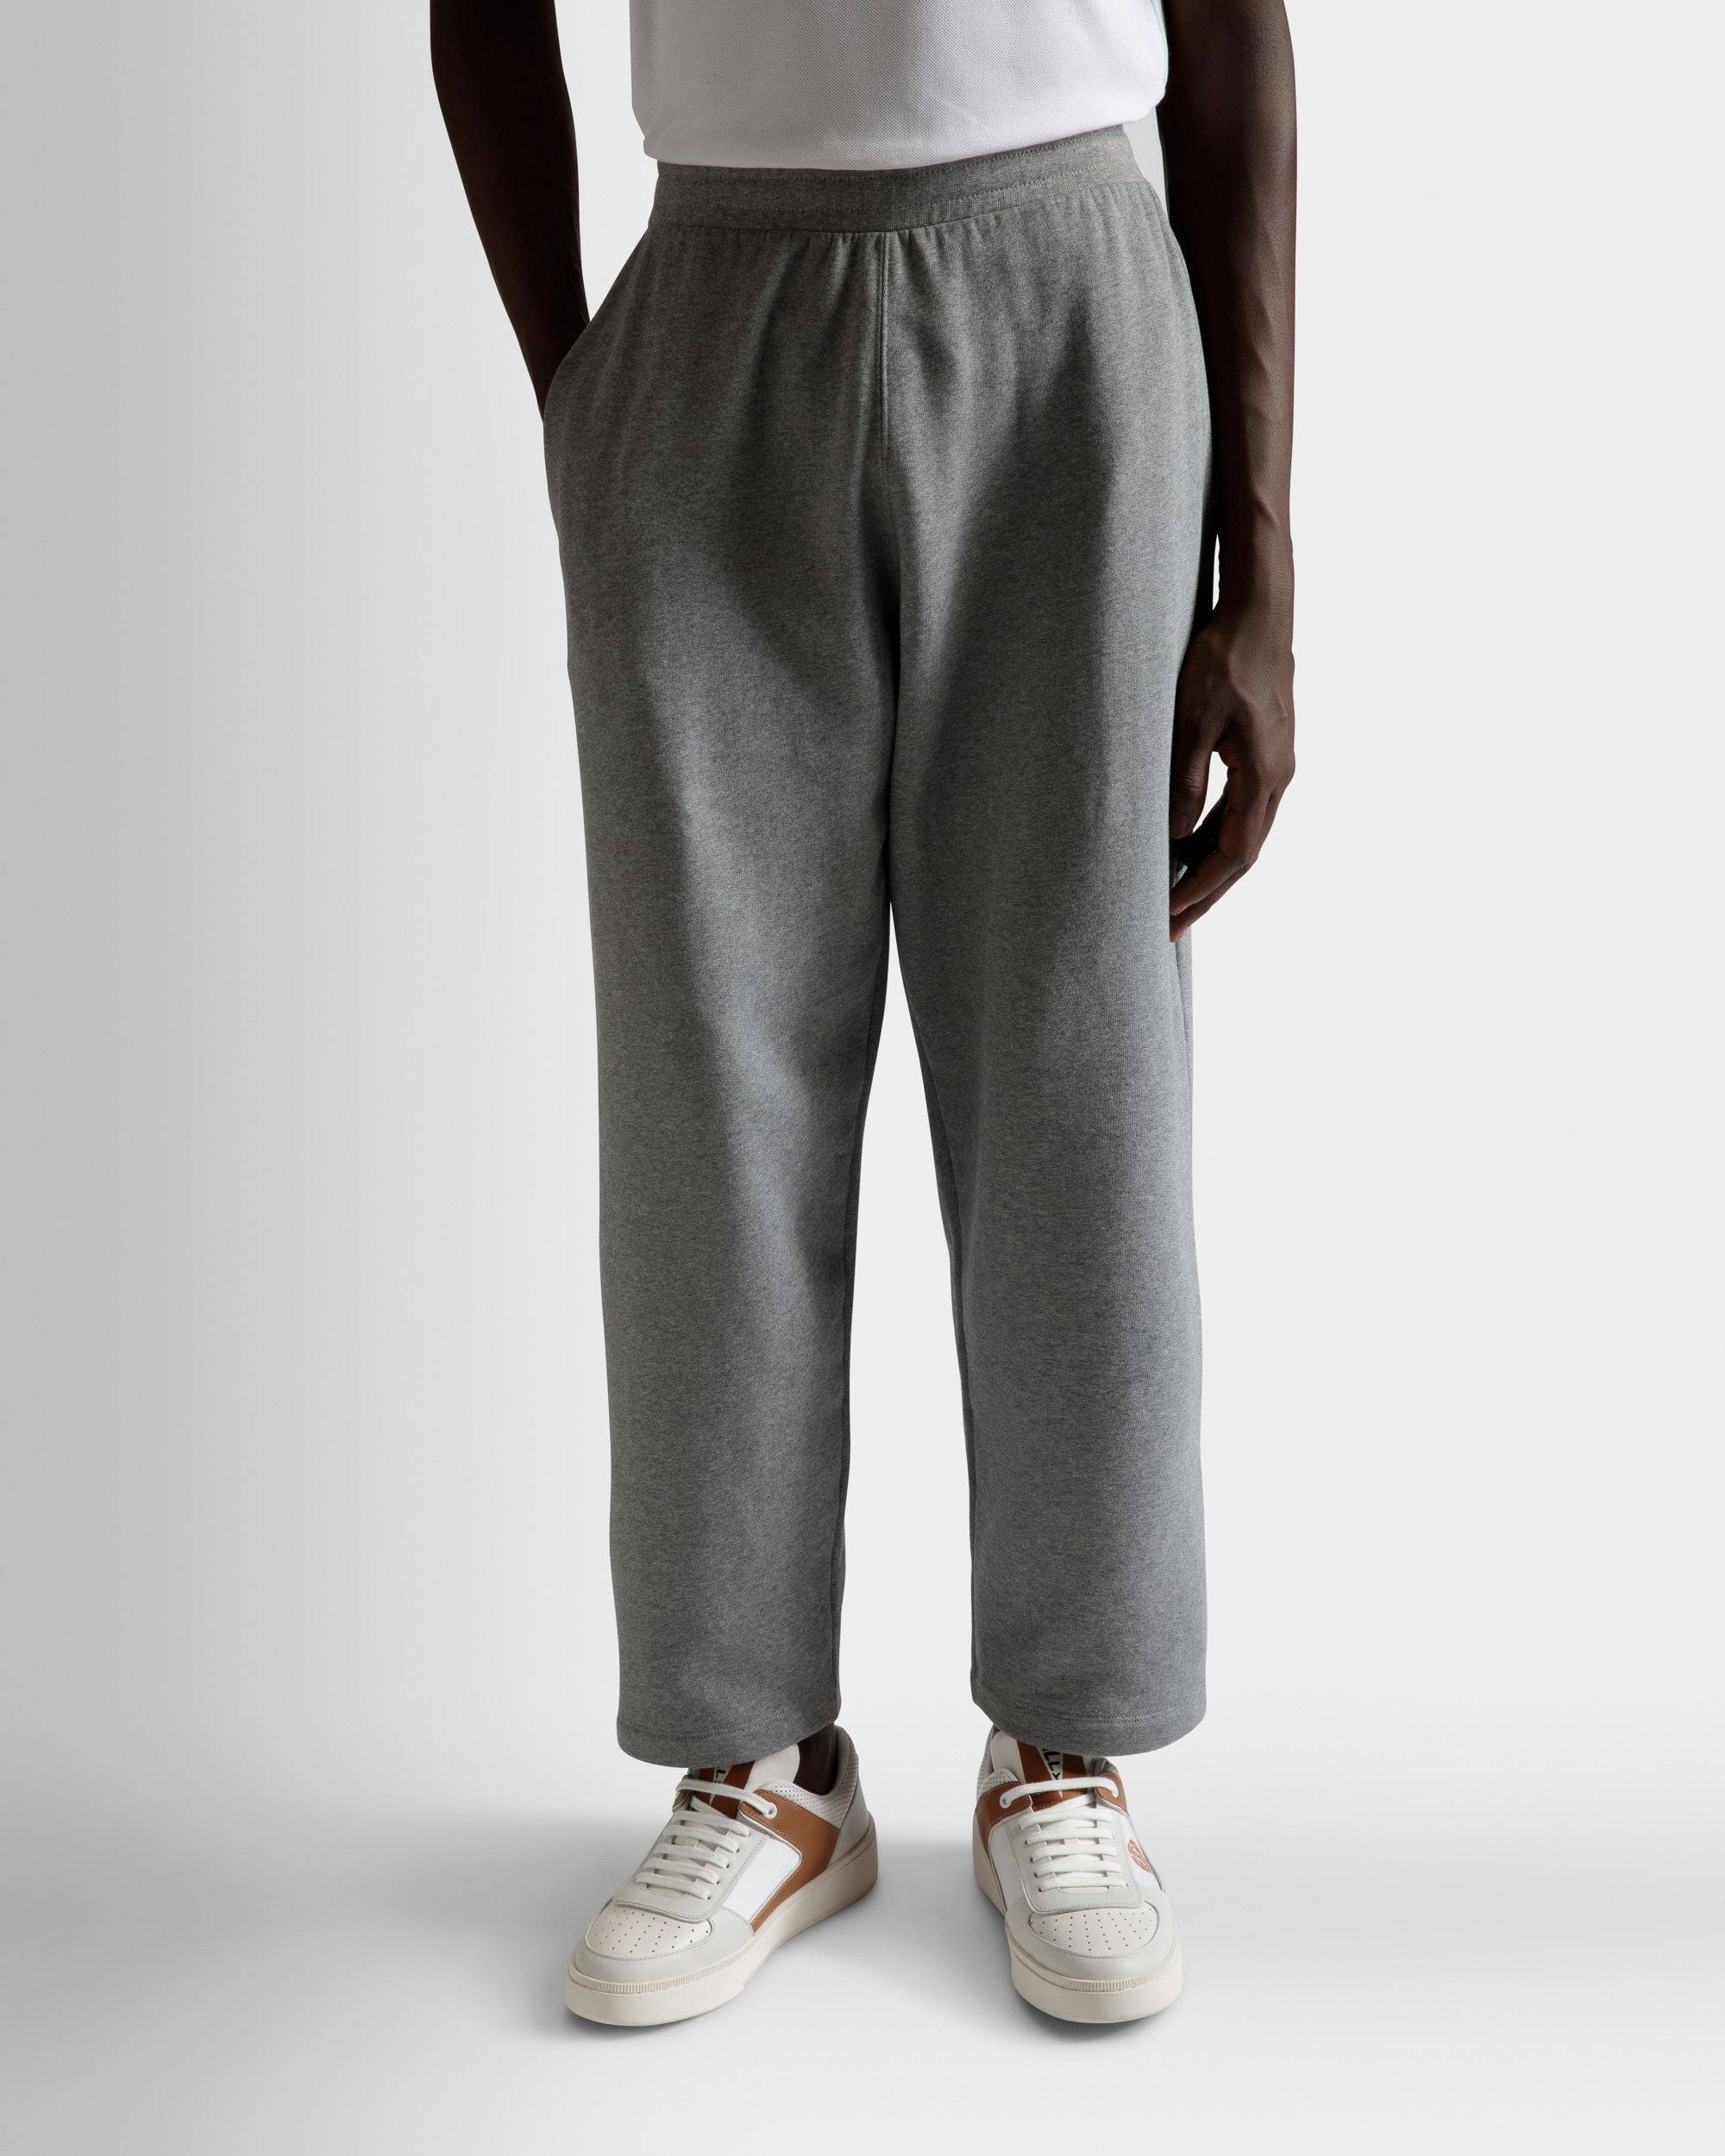 Drawstring Sweatpants | Men's Sweatpants | Gray Melange Cotton | Bally | On Model Close Up